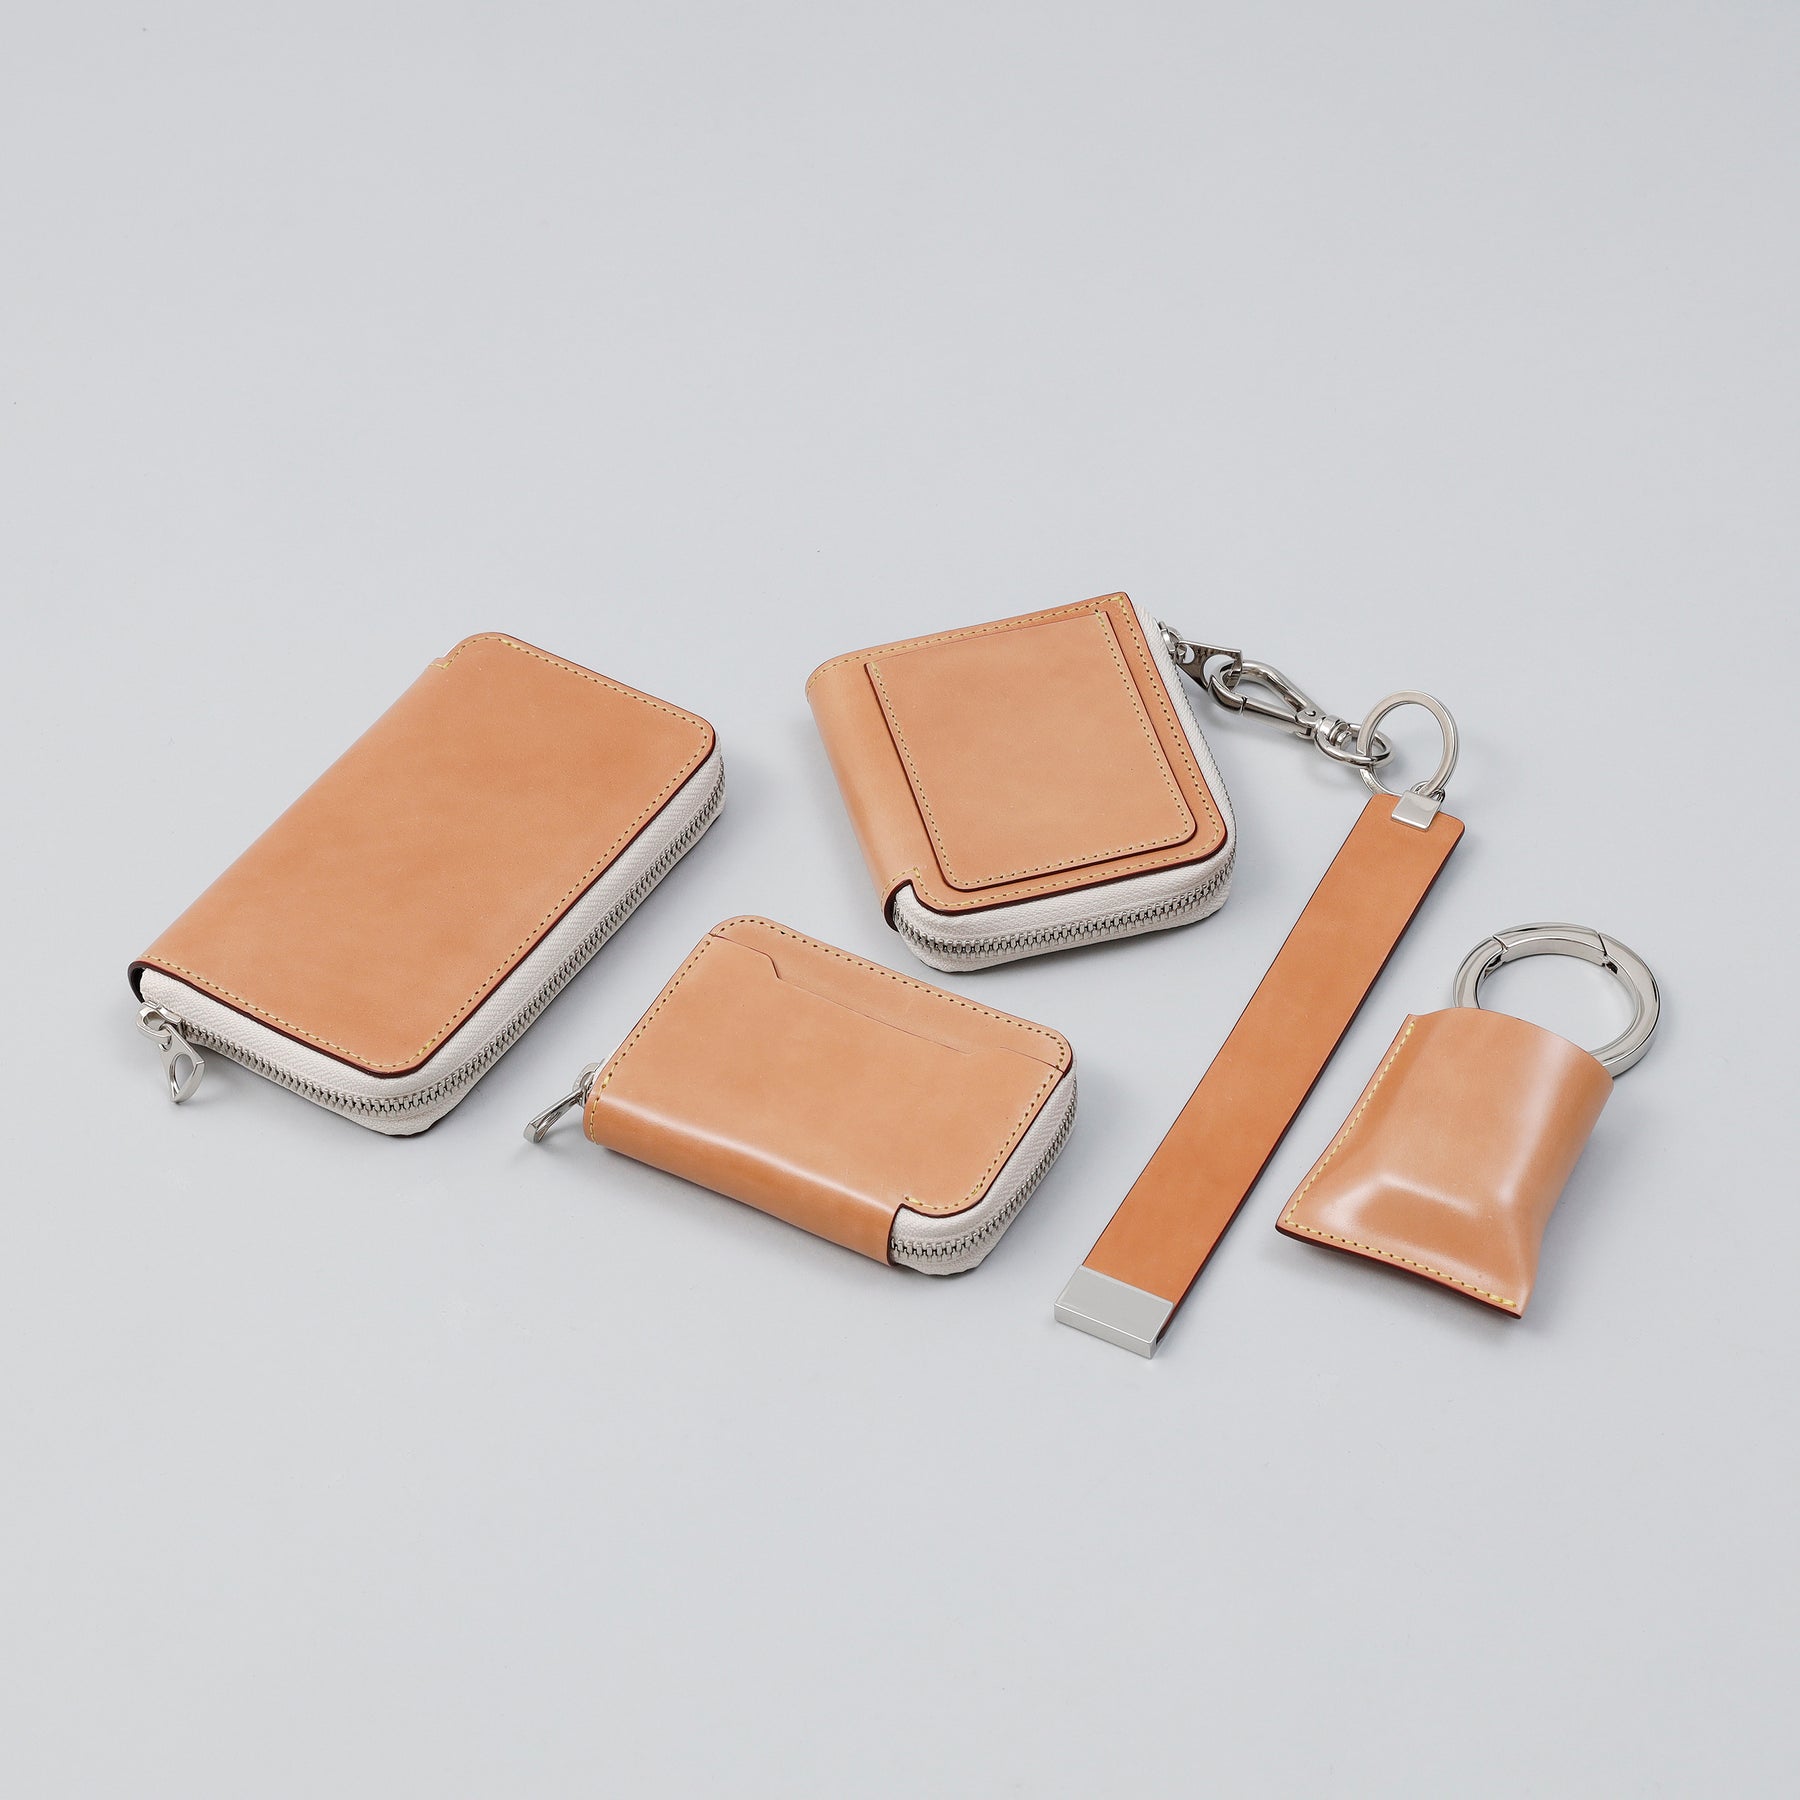 ITTI(イッチ) CRISTY COIN CARD WLT - 折り財布